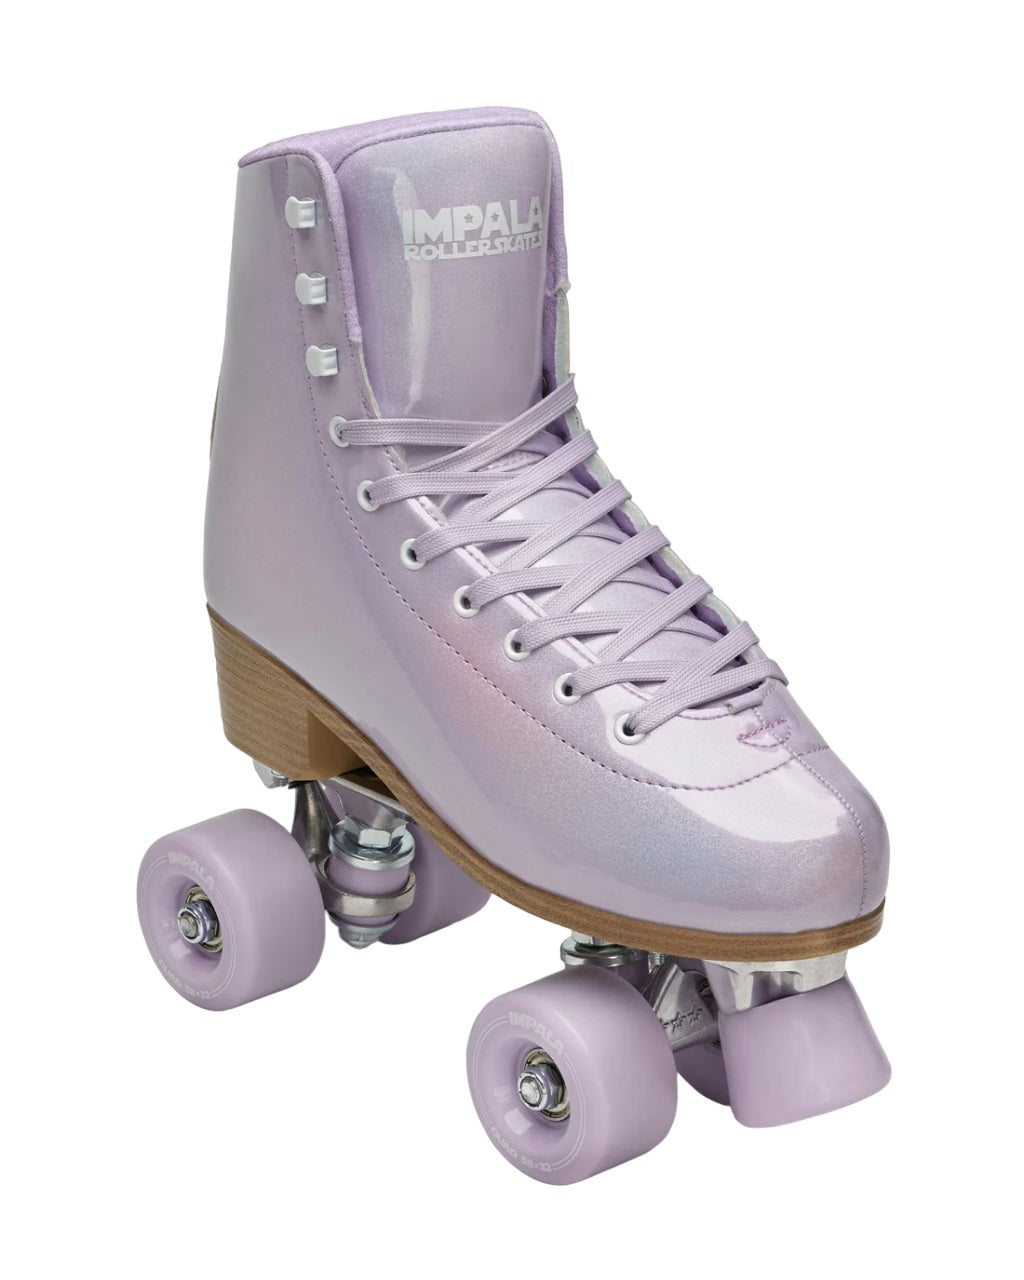 Impala Quad Roller Skates - Lilac Glitter